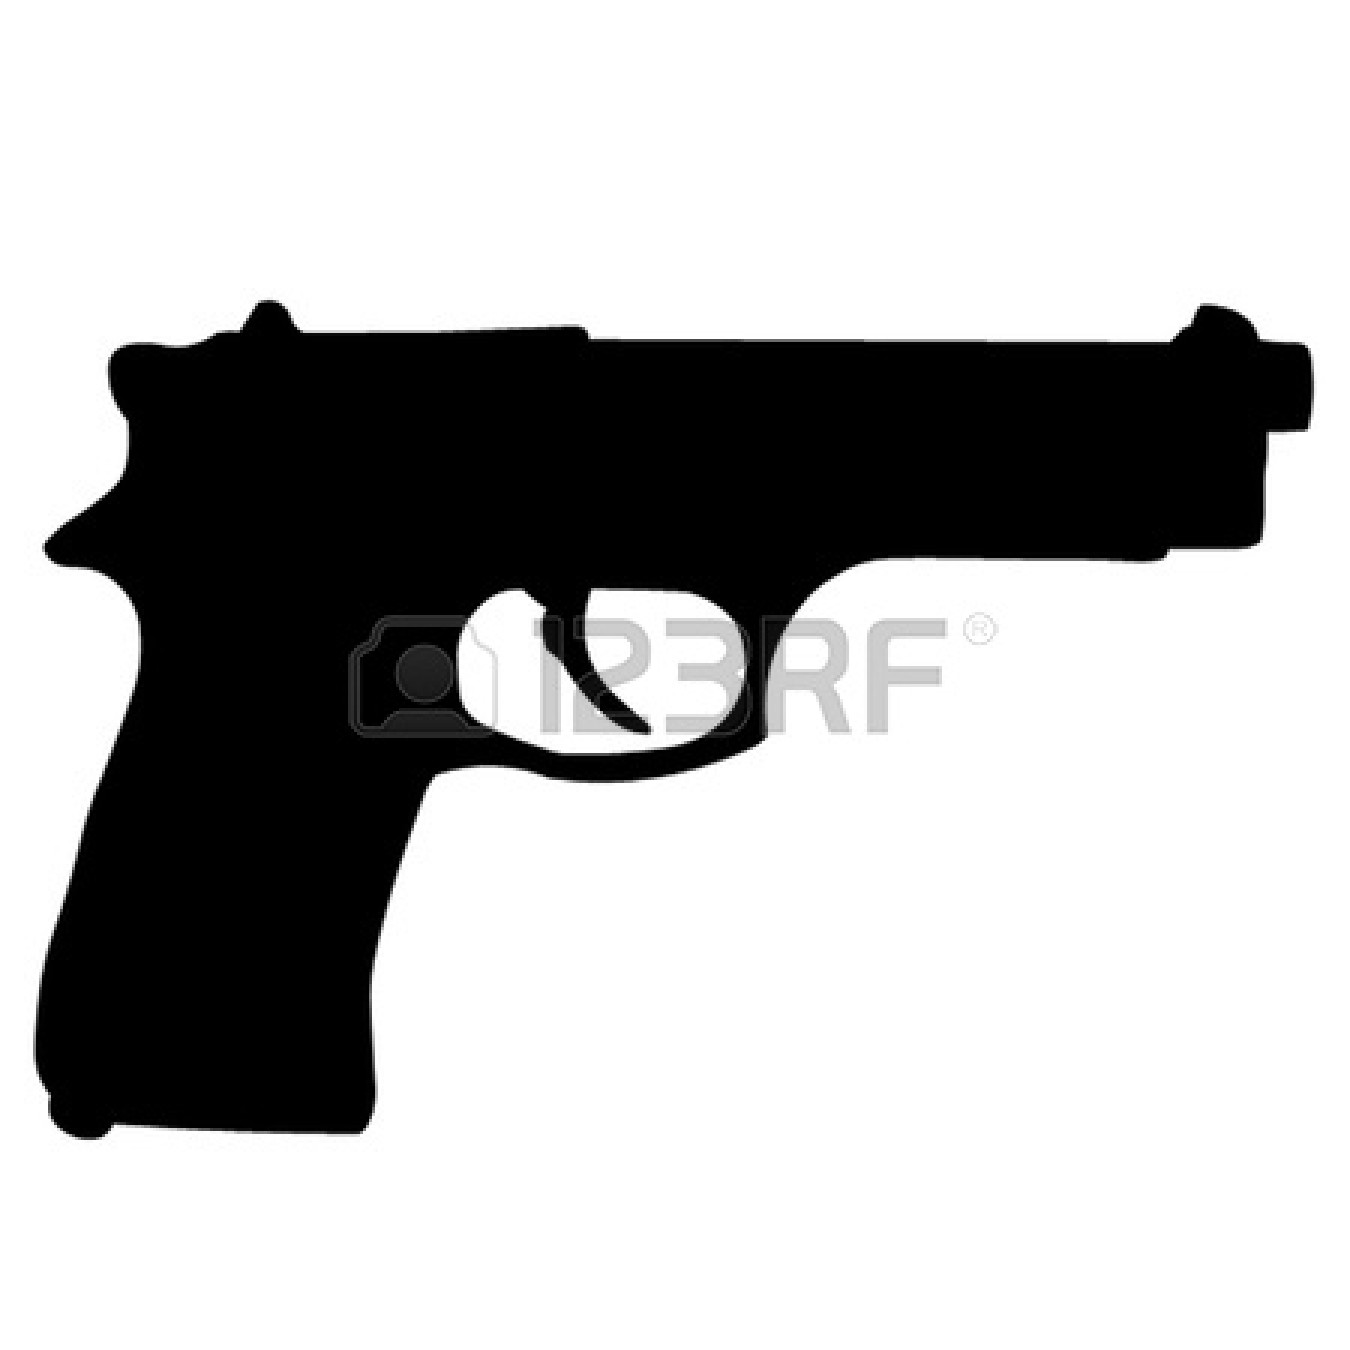 Handgun pistol silhouette iso